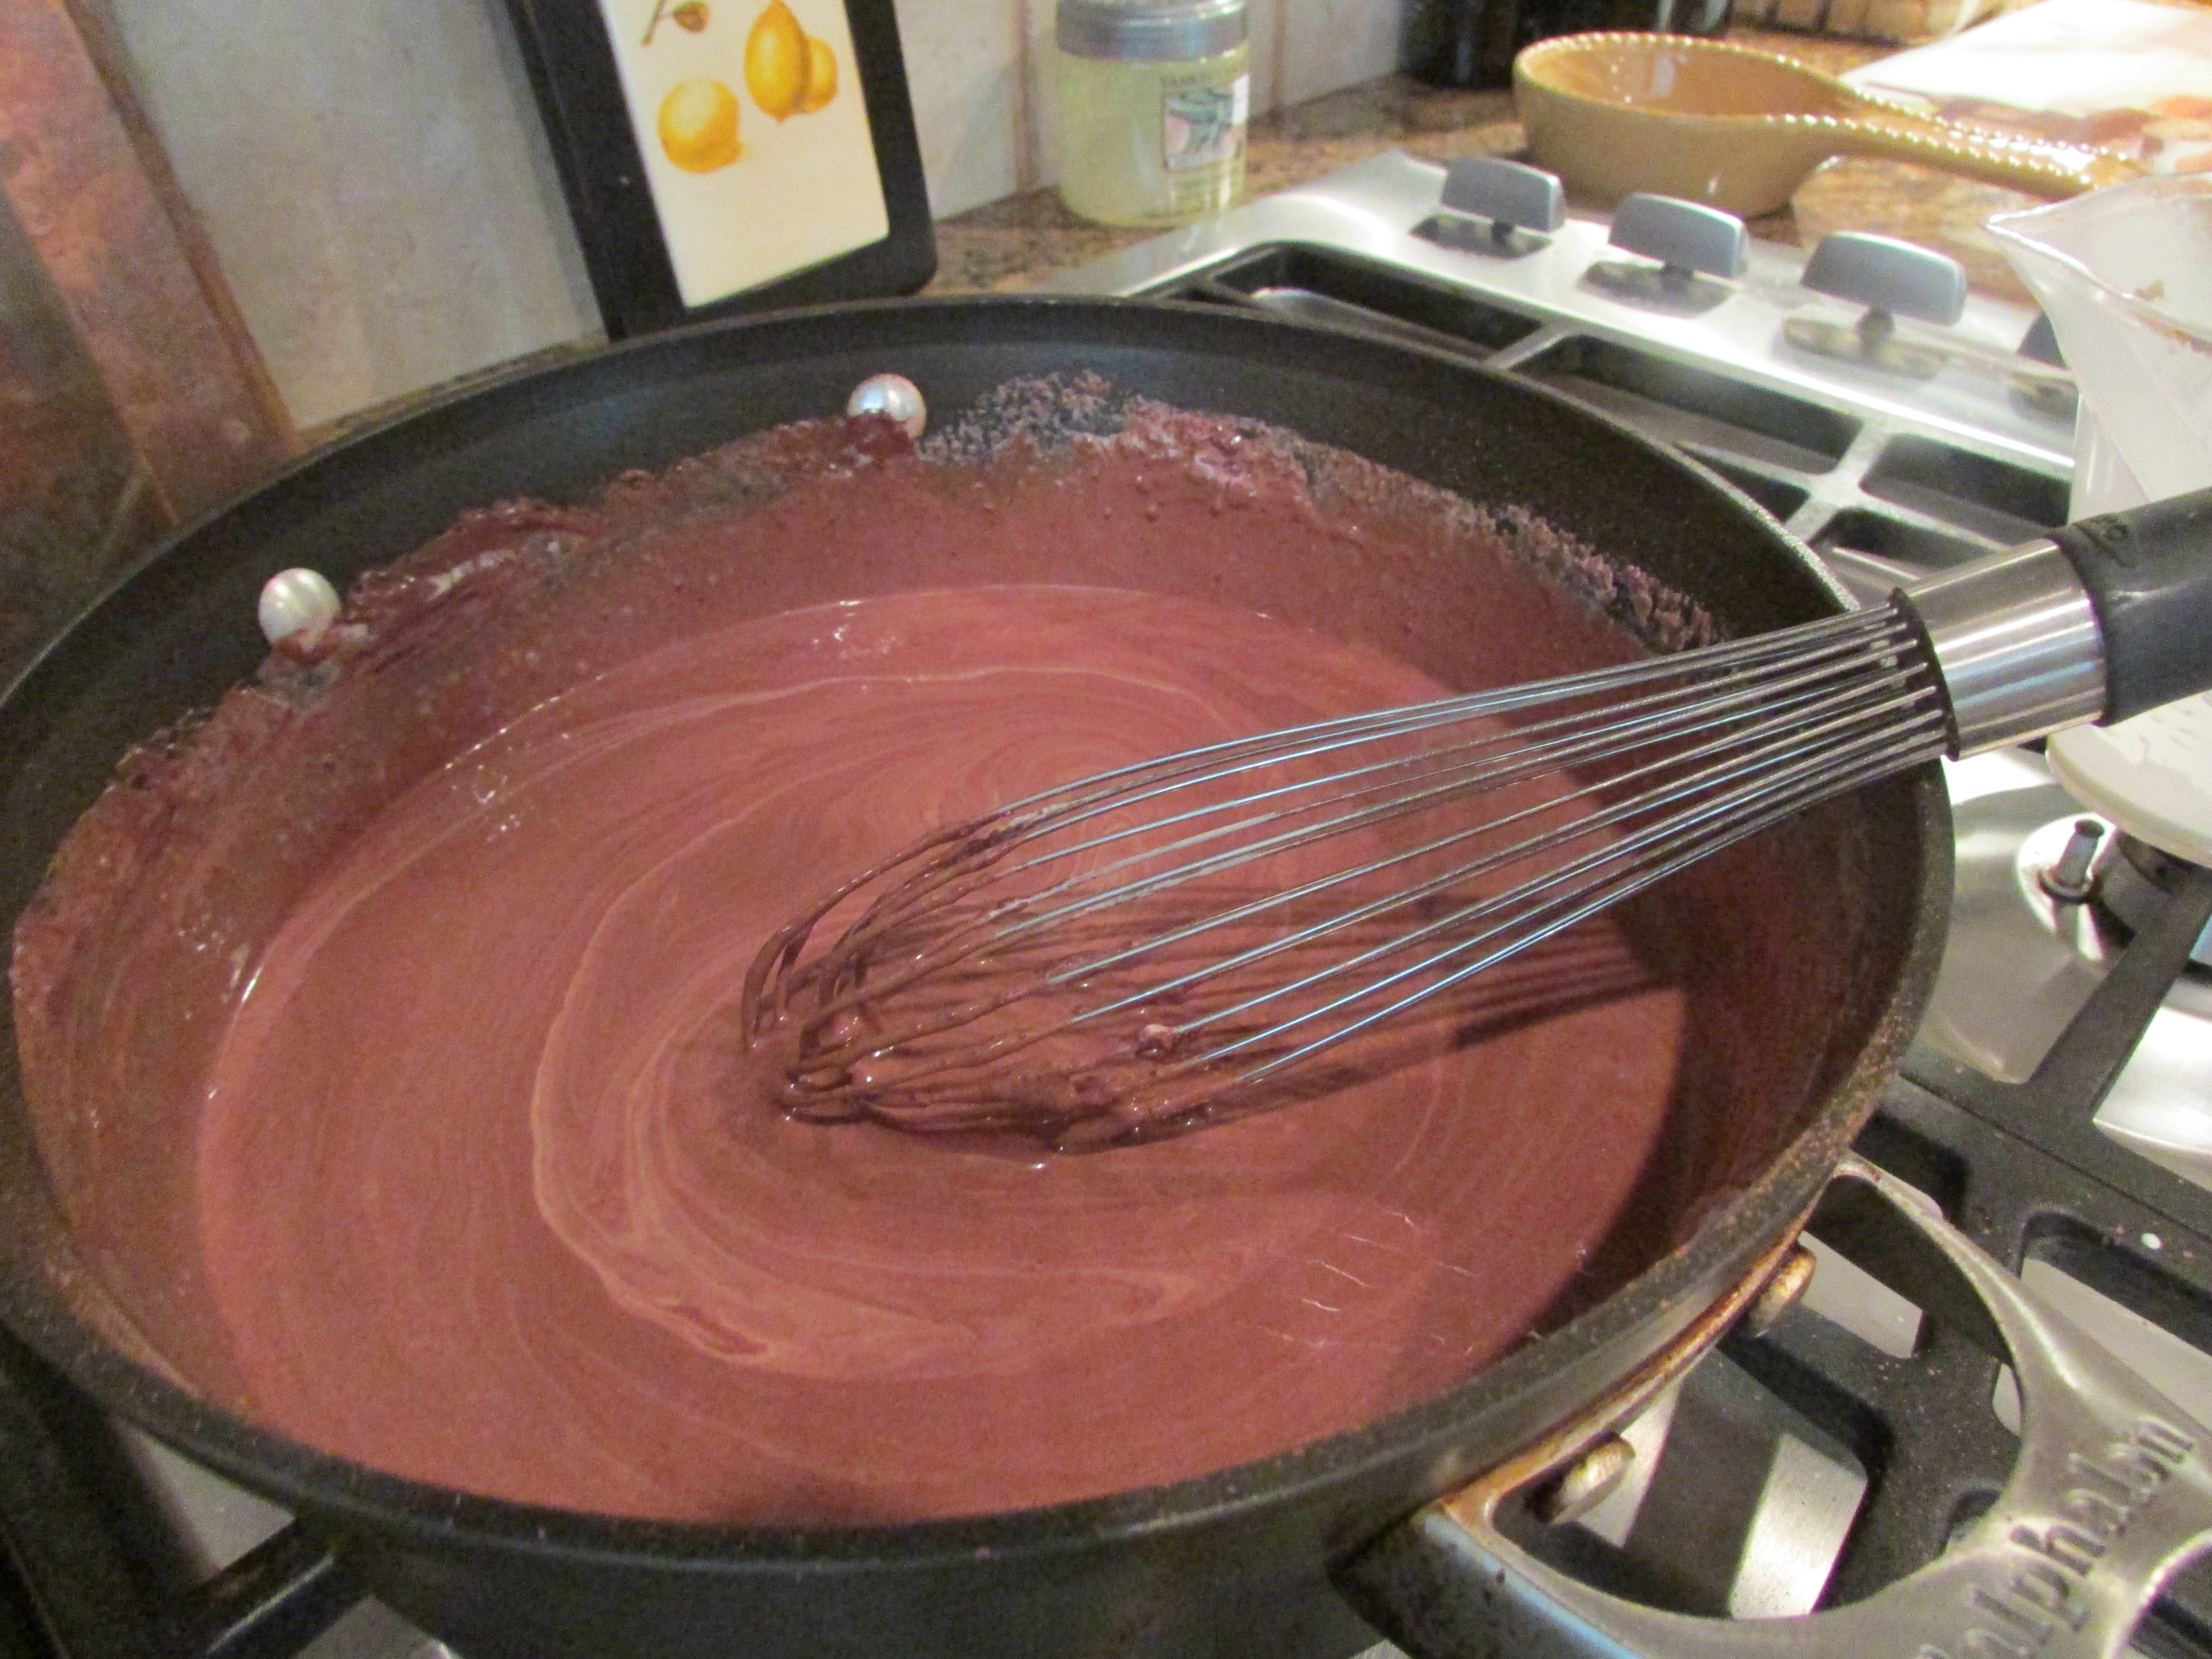 Making the gelato mixture